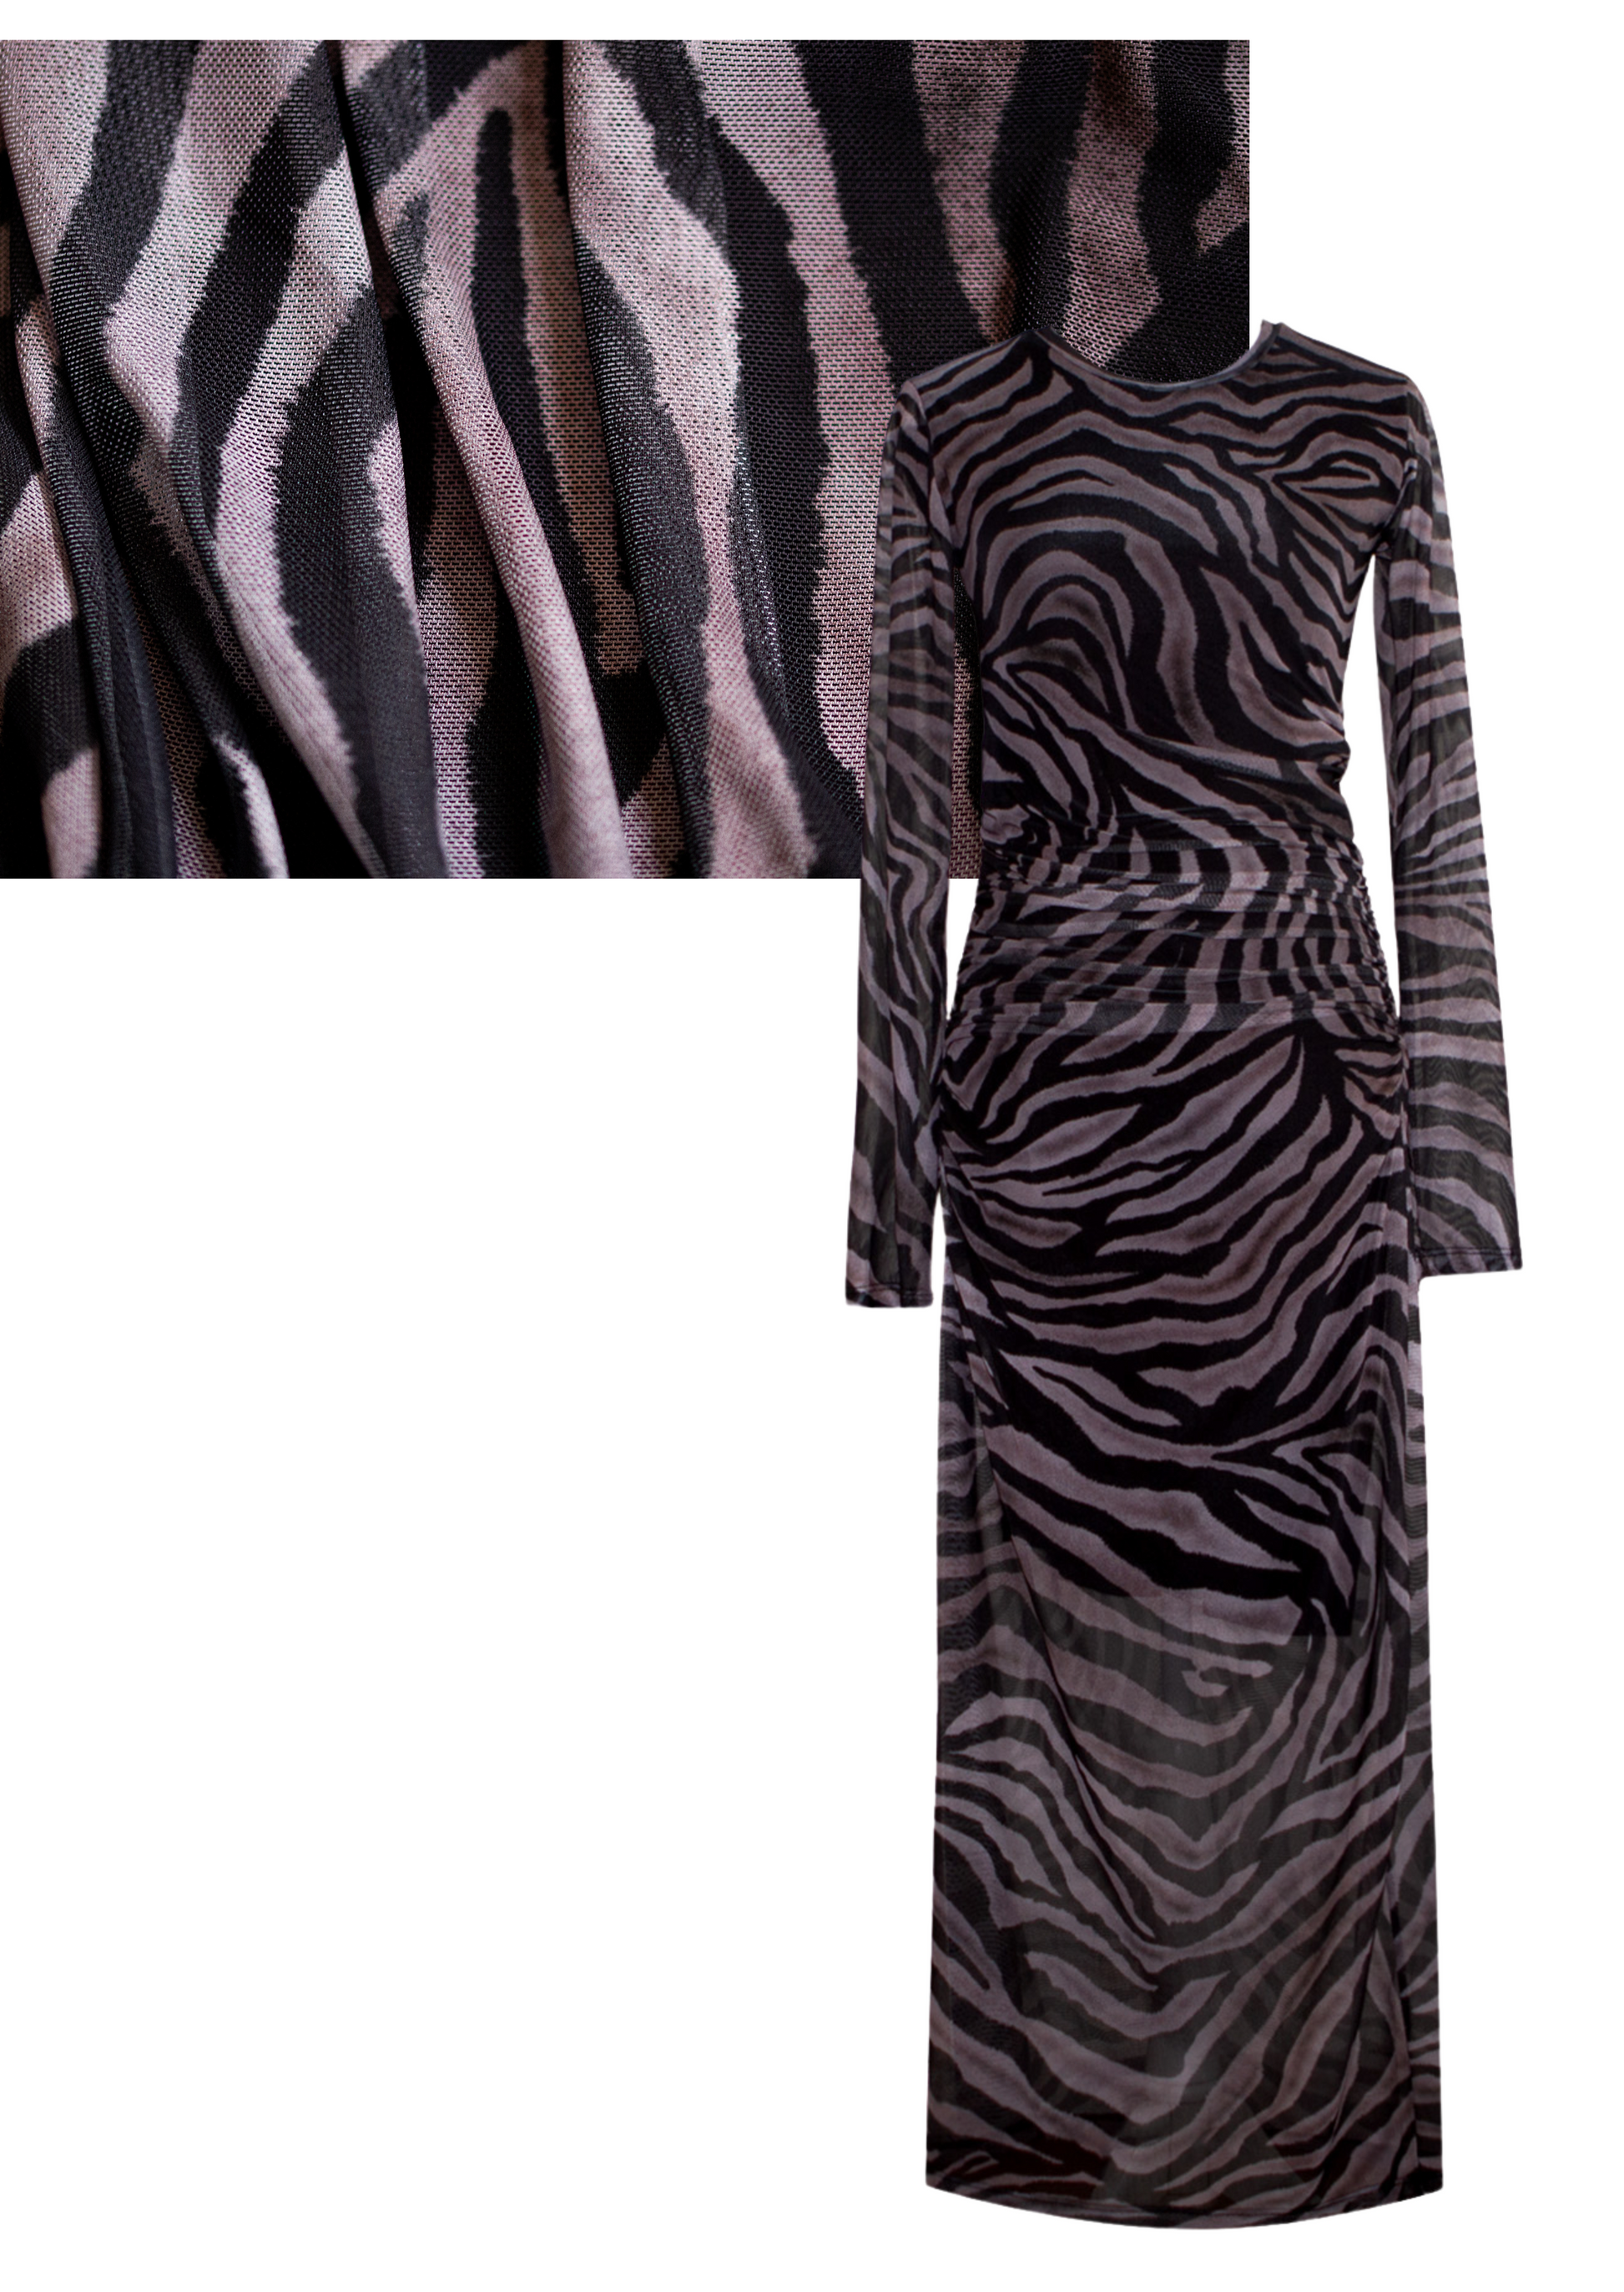 mesh Zebra patterned Maxi dress Zebra dress, animal print fashion, Maxi dress, Trendy dress, mesh dress, Women's fashion, Bold pattern, Statement dress, Stylish maxi dress